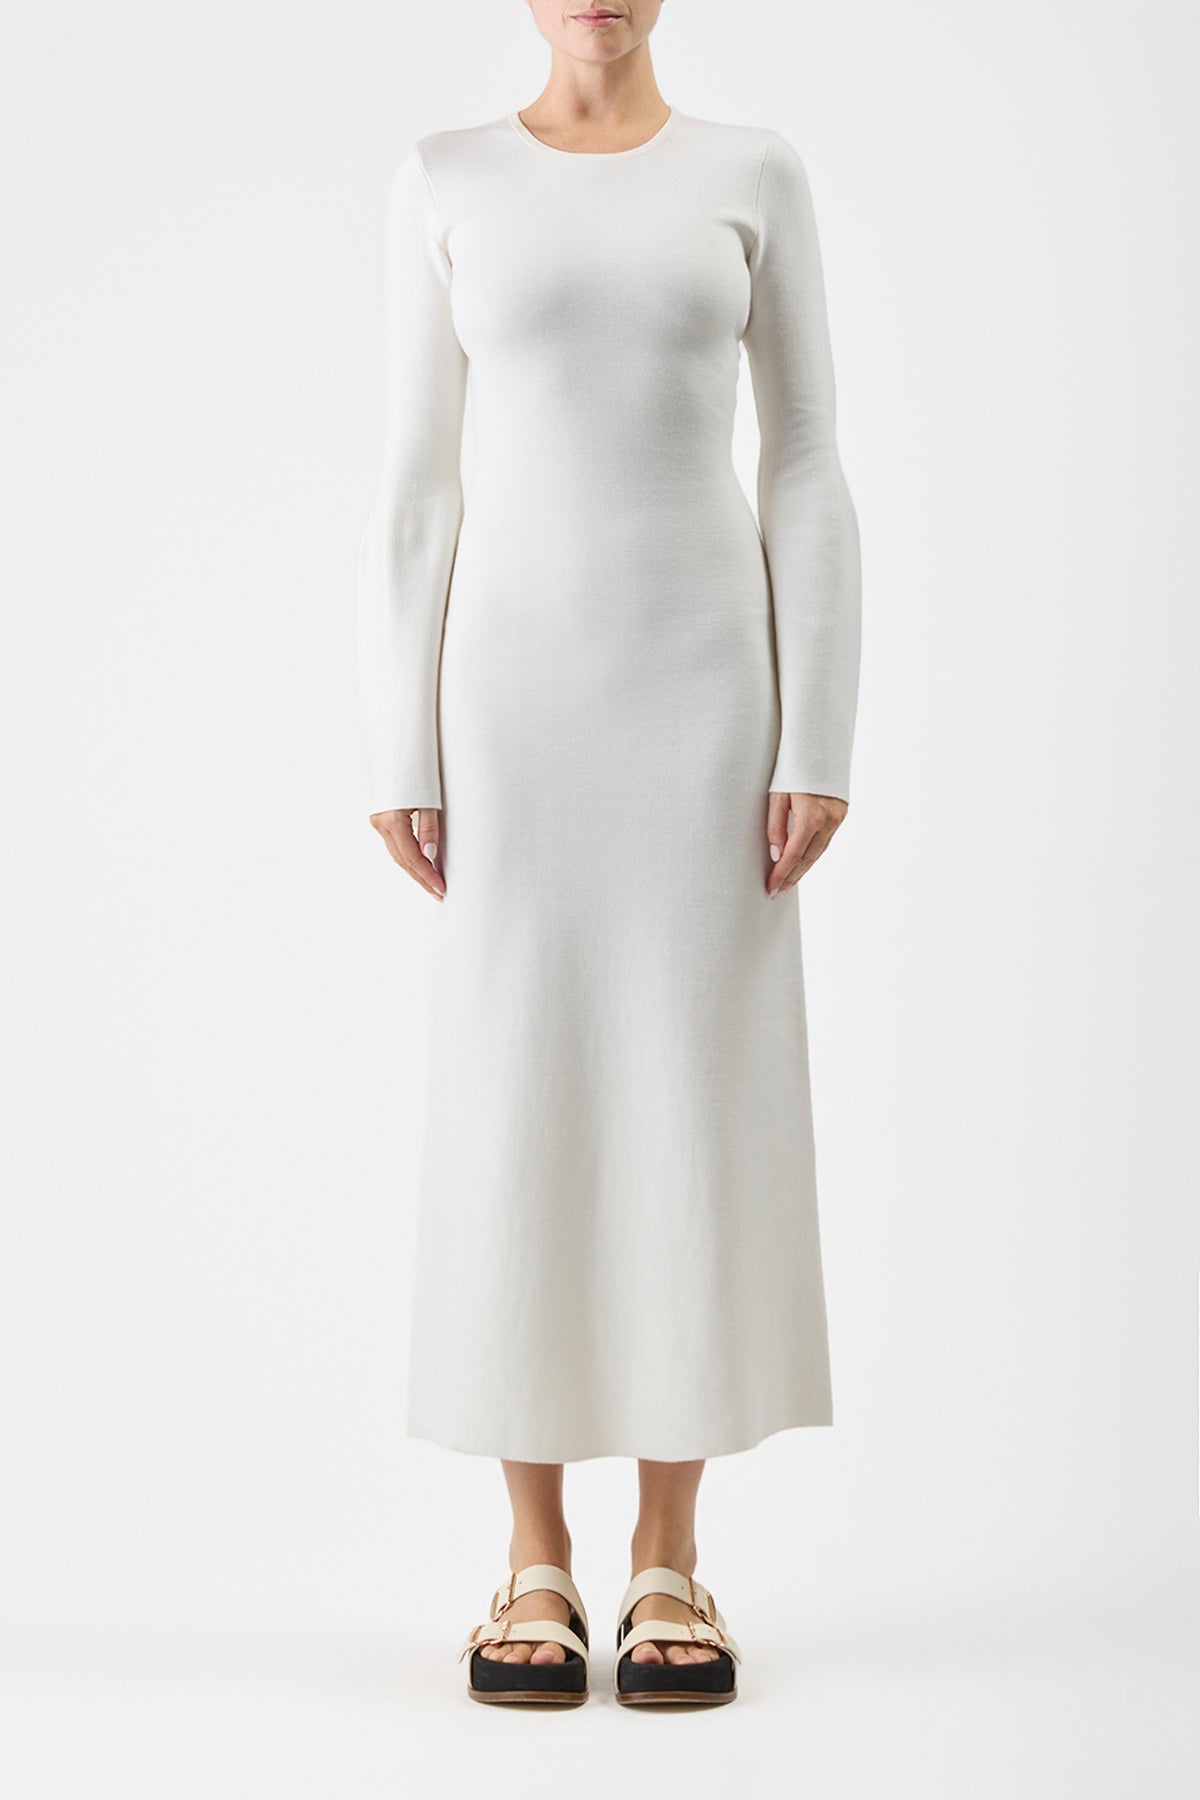 Palanco Knit Dress in White Cashmere Merino Wool